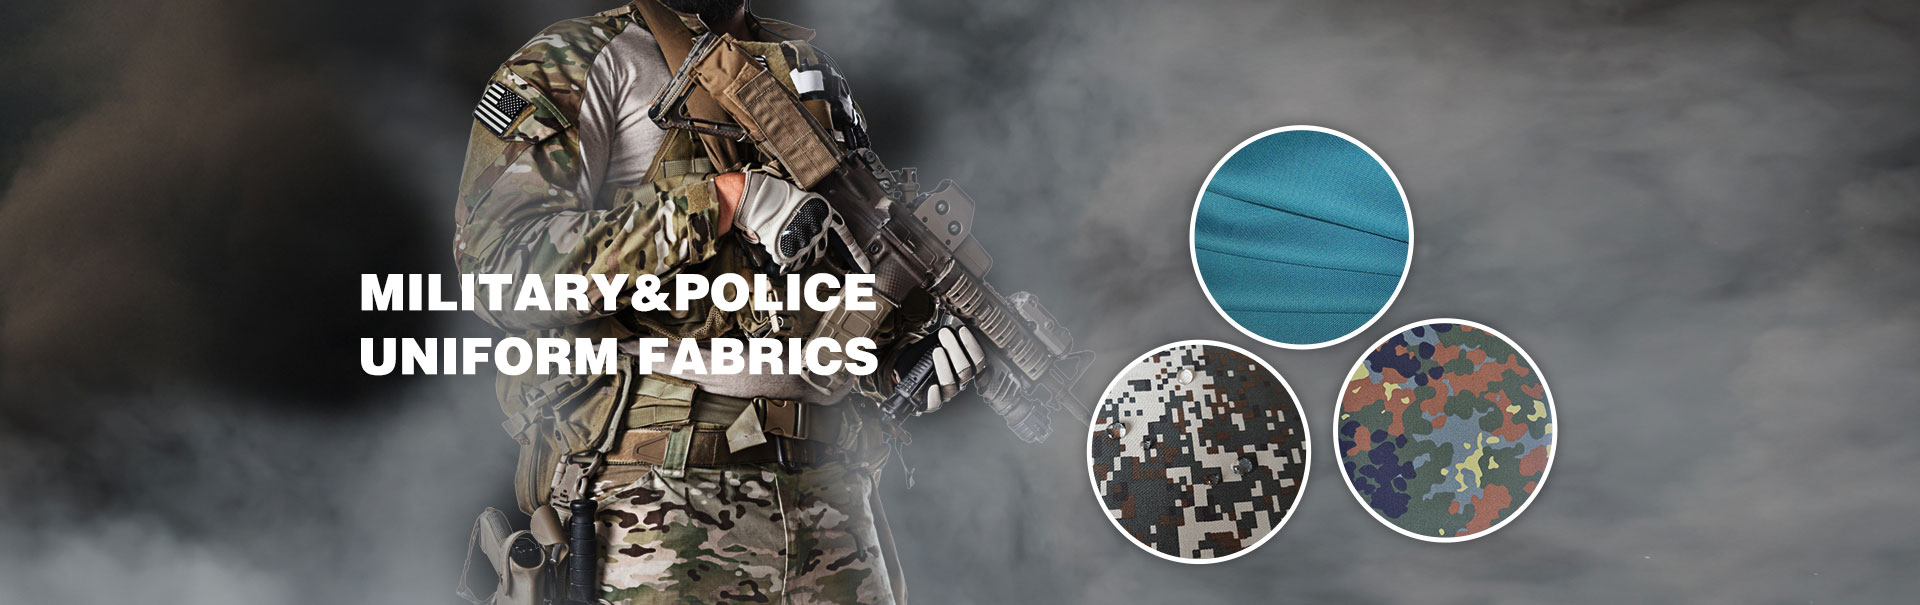 Military&Police Uniform Fabrics Factory